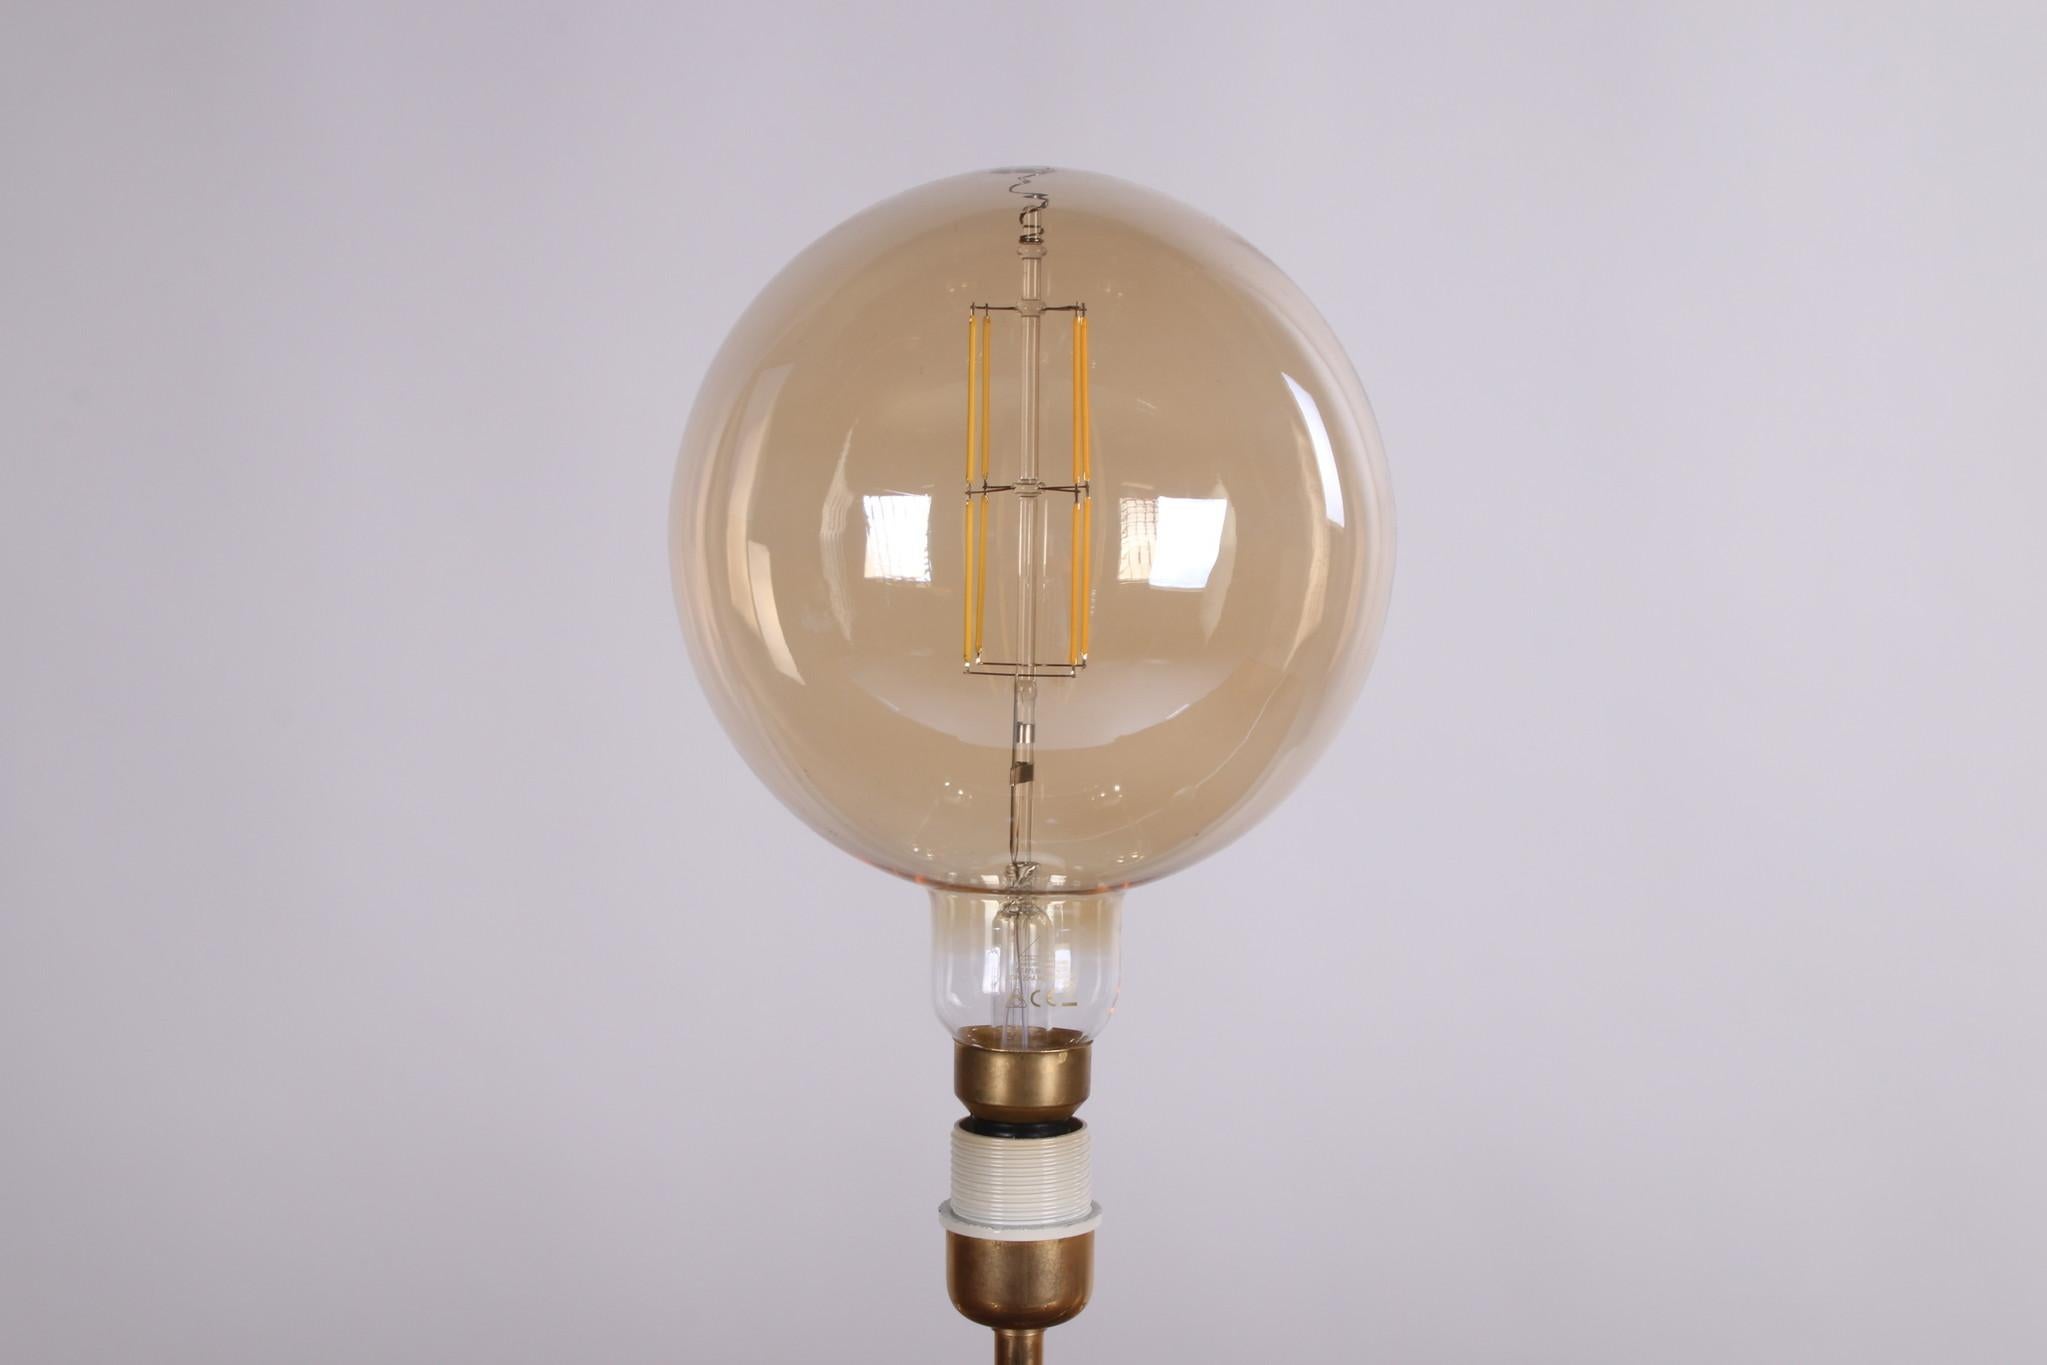  Charles Hollis Jones Gold Plexiglass Hollywood Regency Table Lamp, 70s For Sale 2